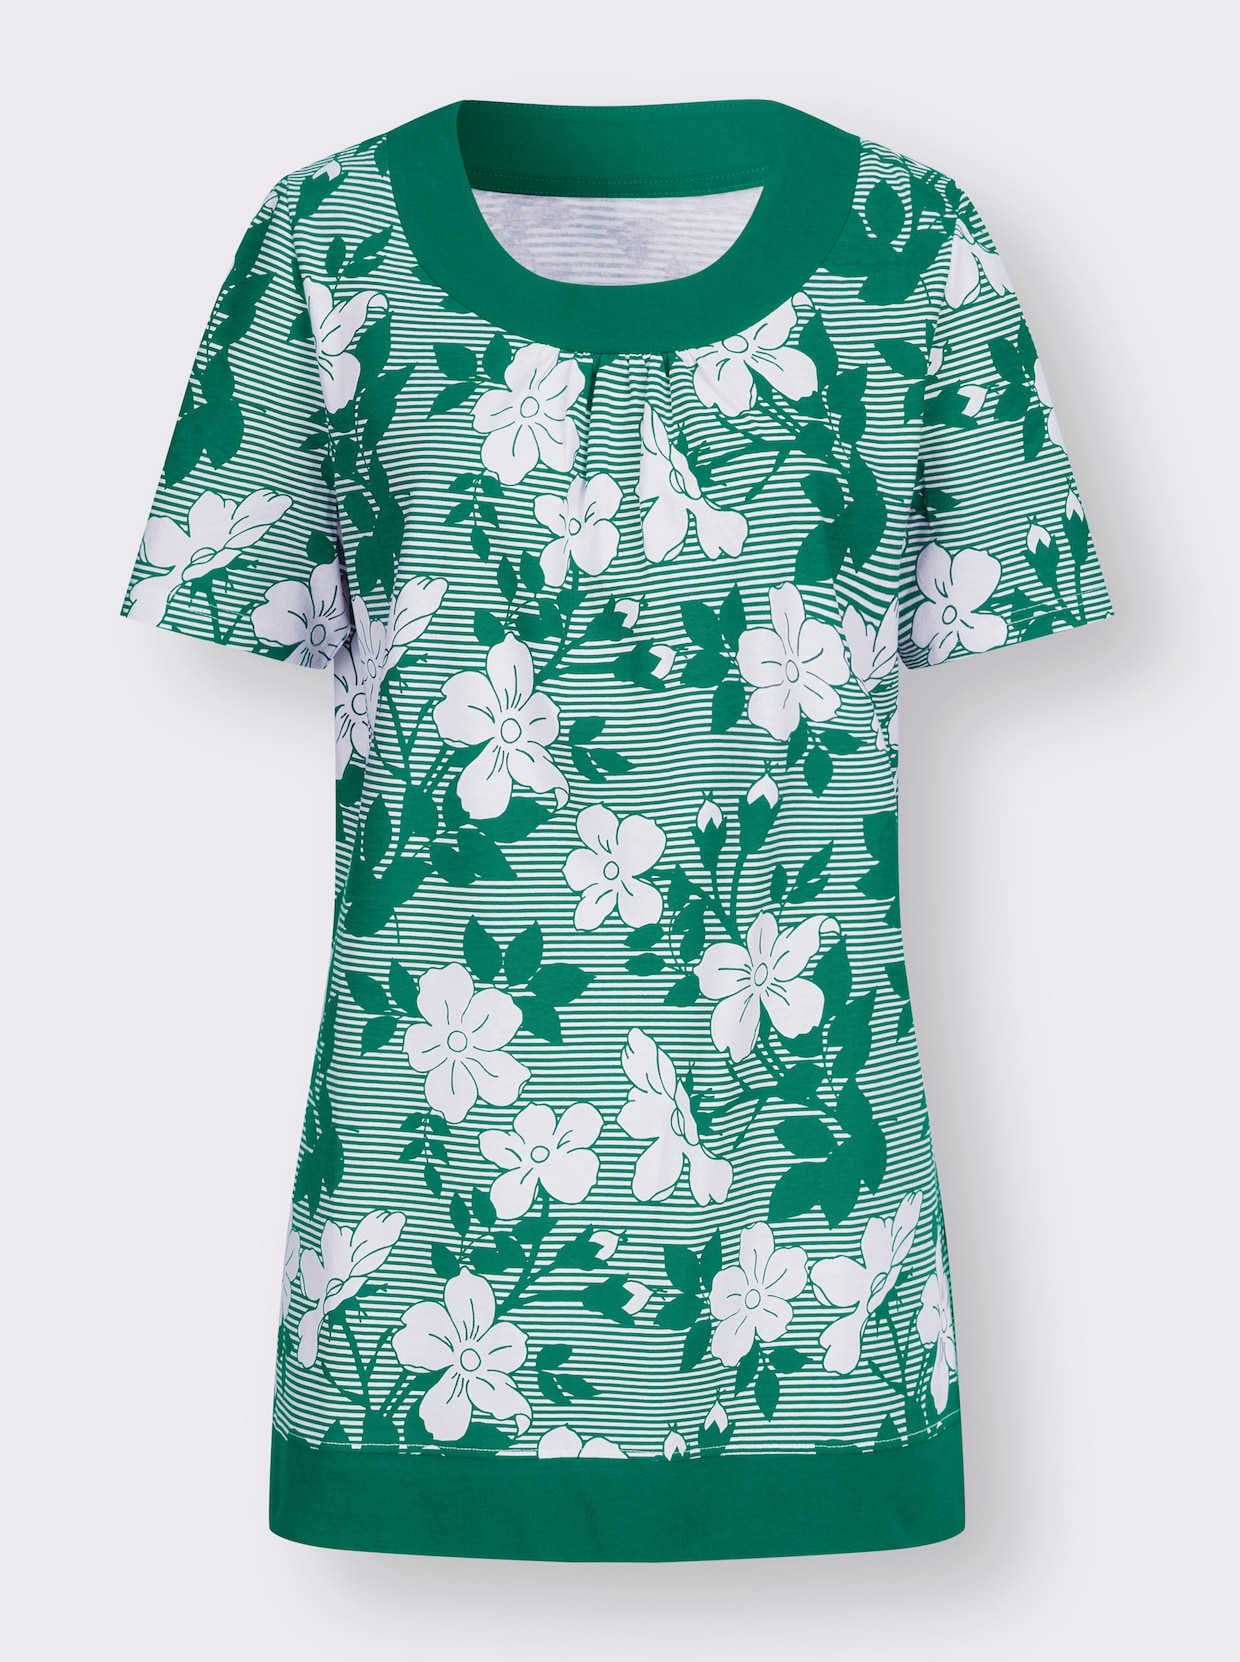 Lang shirt - groen/wit bedrukt